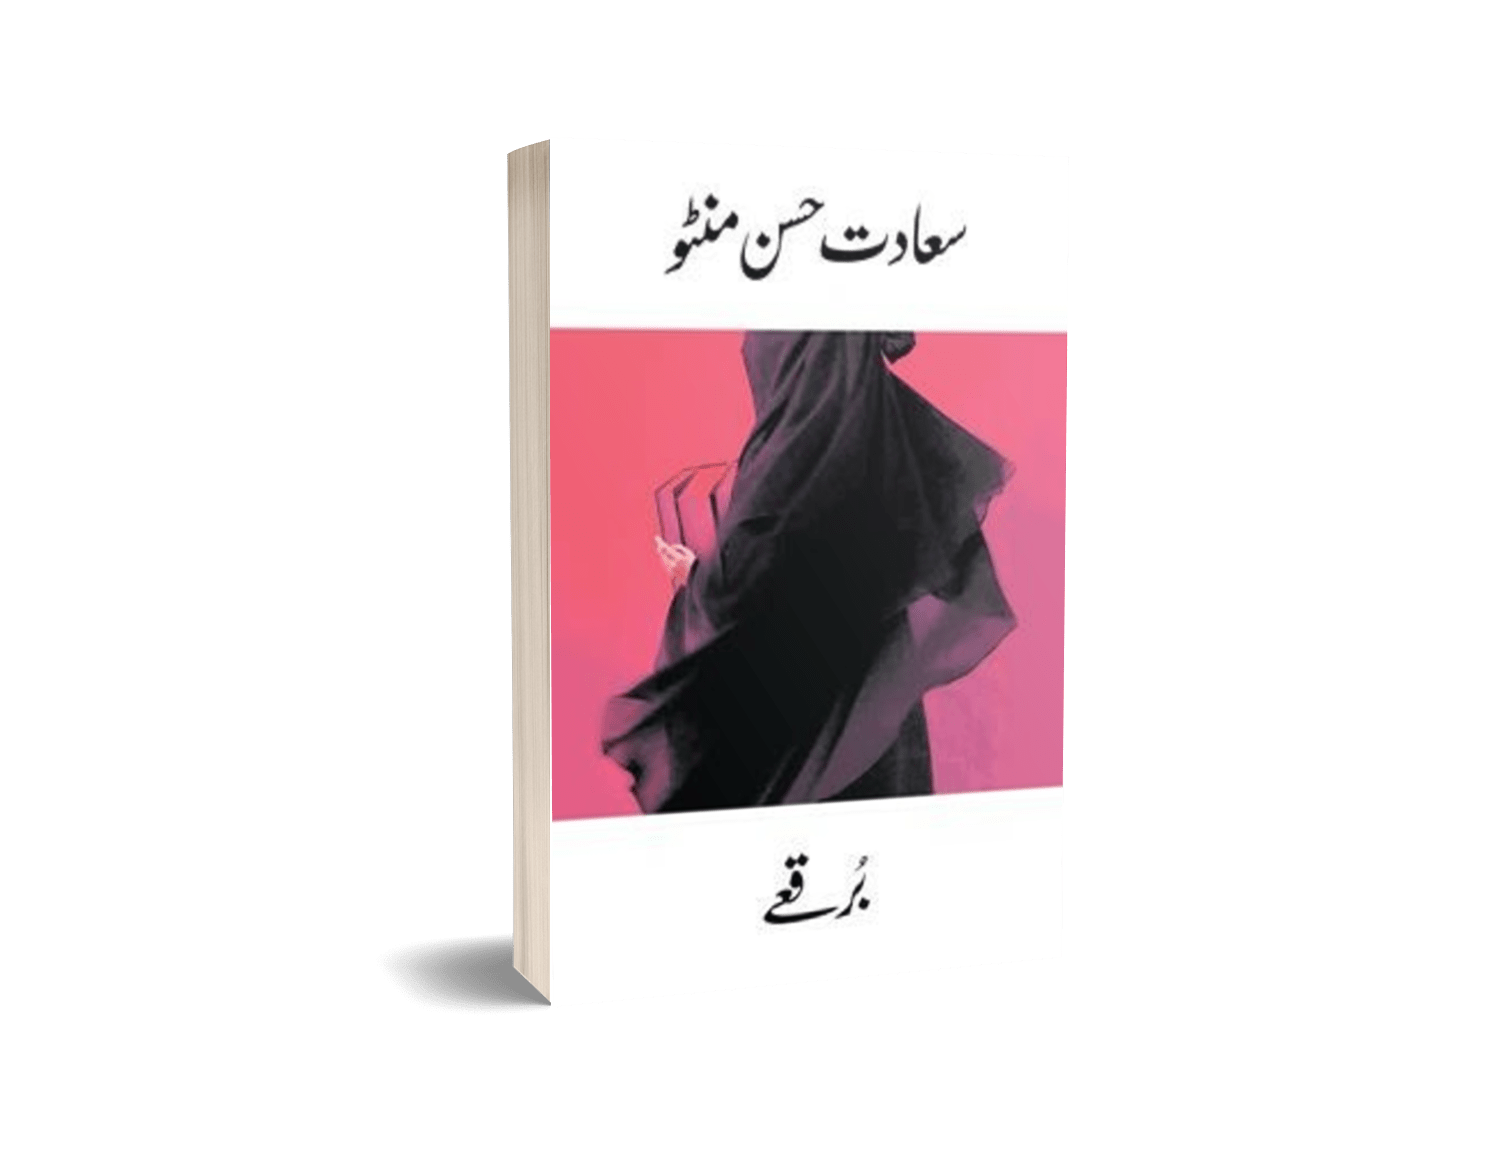 Burqe Book by Saadat Hasan Manto